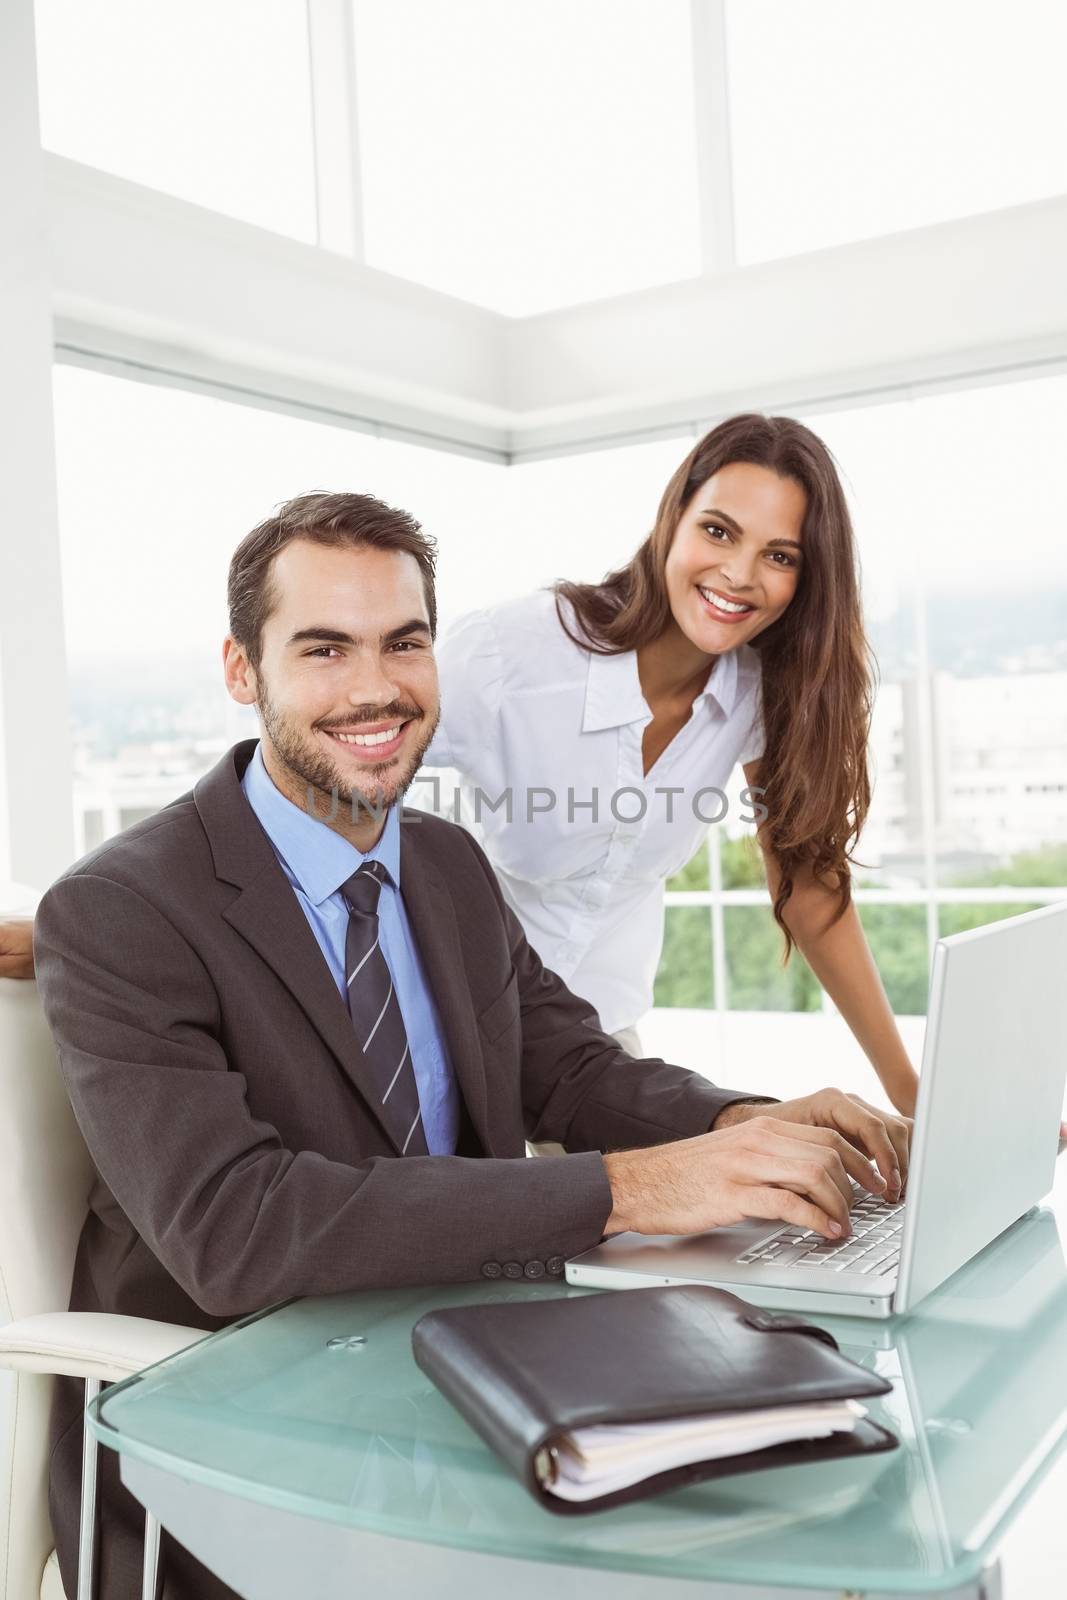 Business people using laptop in office by Wavebreakmedia